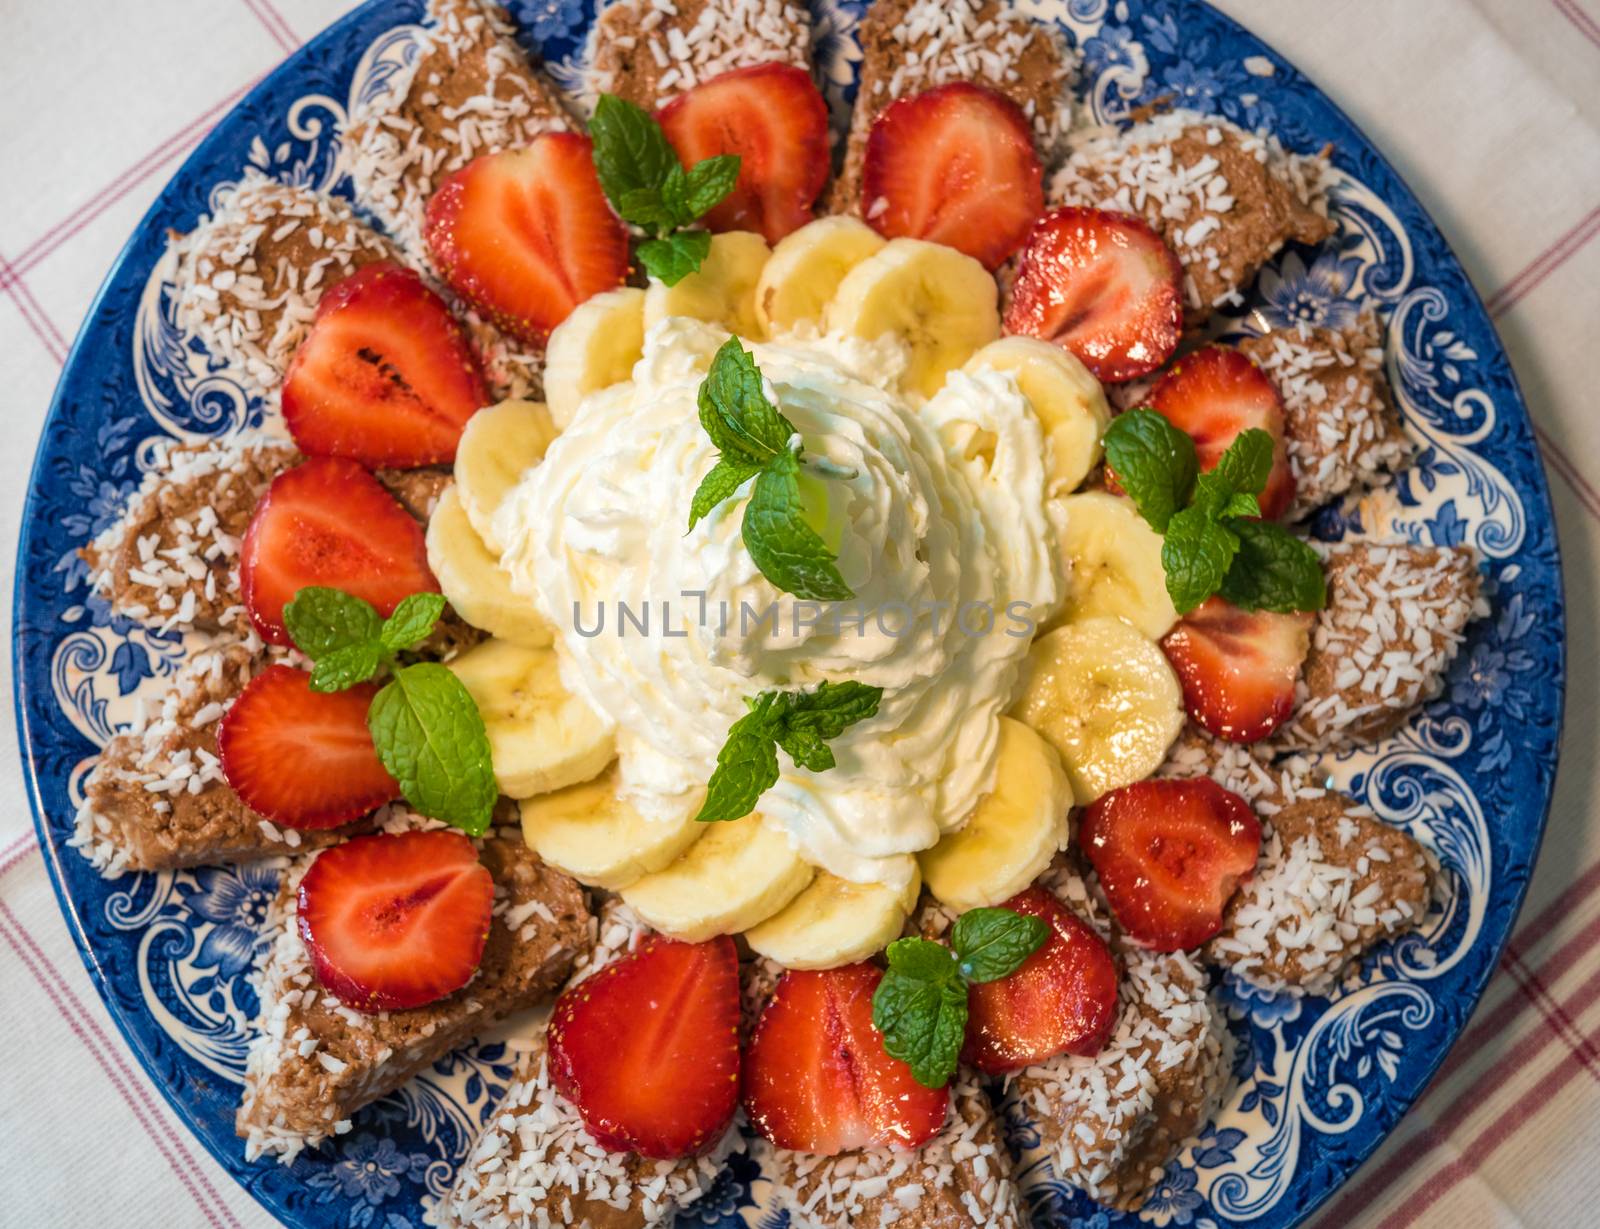 Chocolate dessert with banana and strawberry under whipped cream by dolfinvik